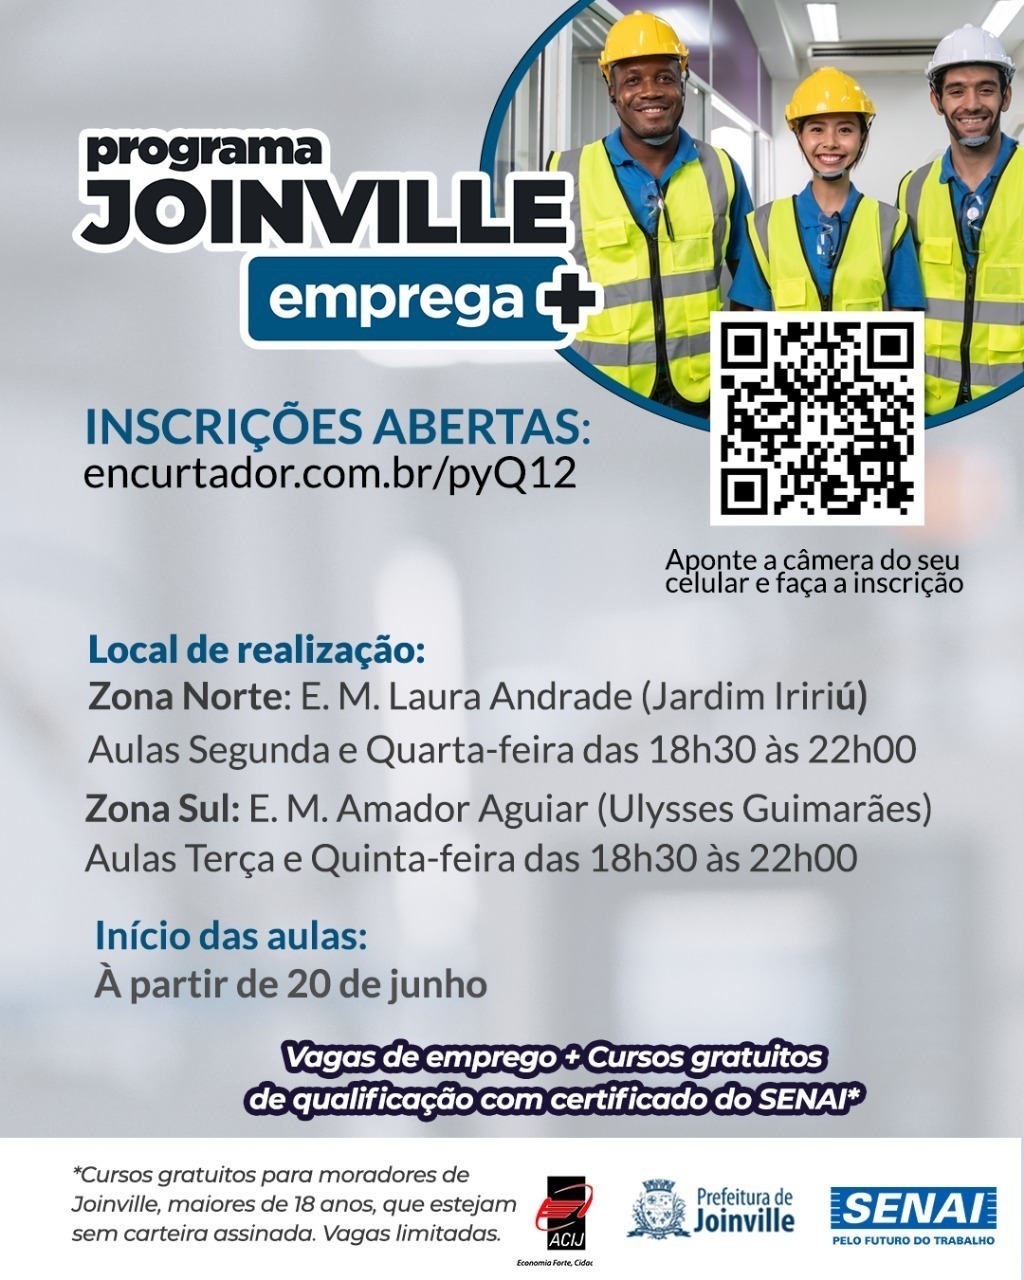 JOINVASC – Programa de Registro de AVC de Joinville ganhou o